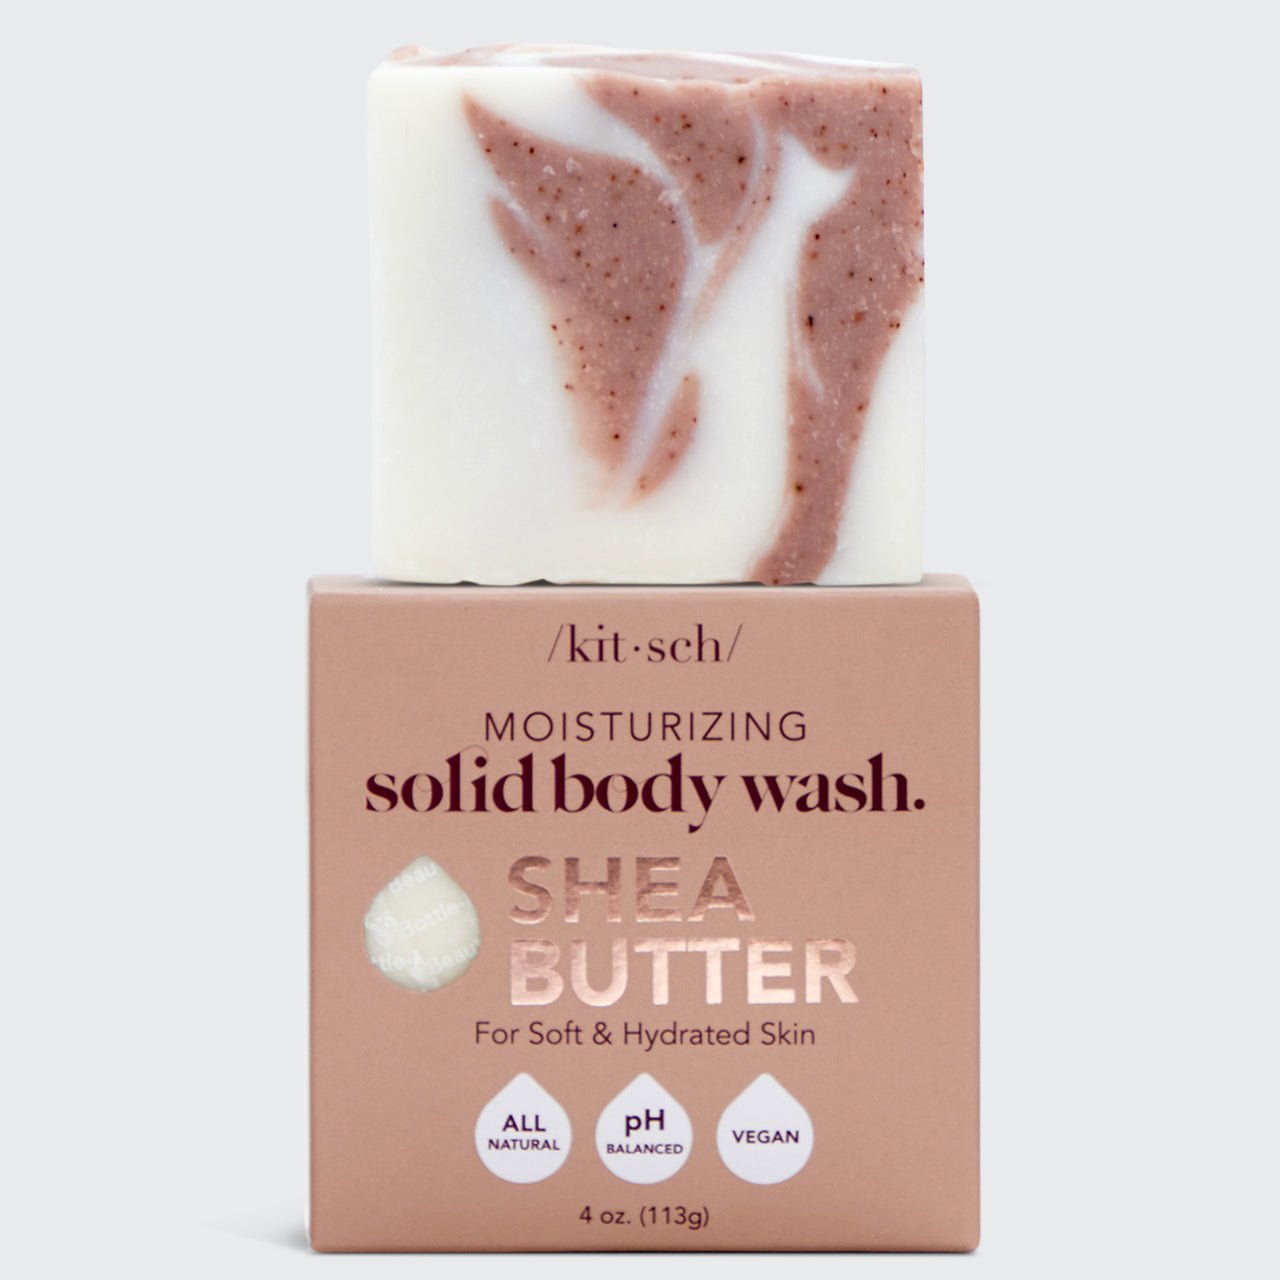 Soap for Men Shea Butter Soap {6 oz}